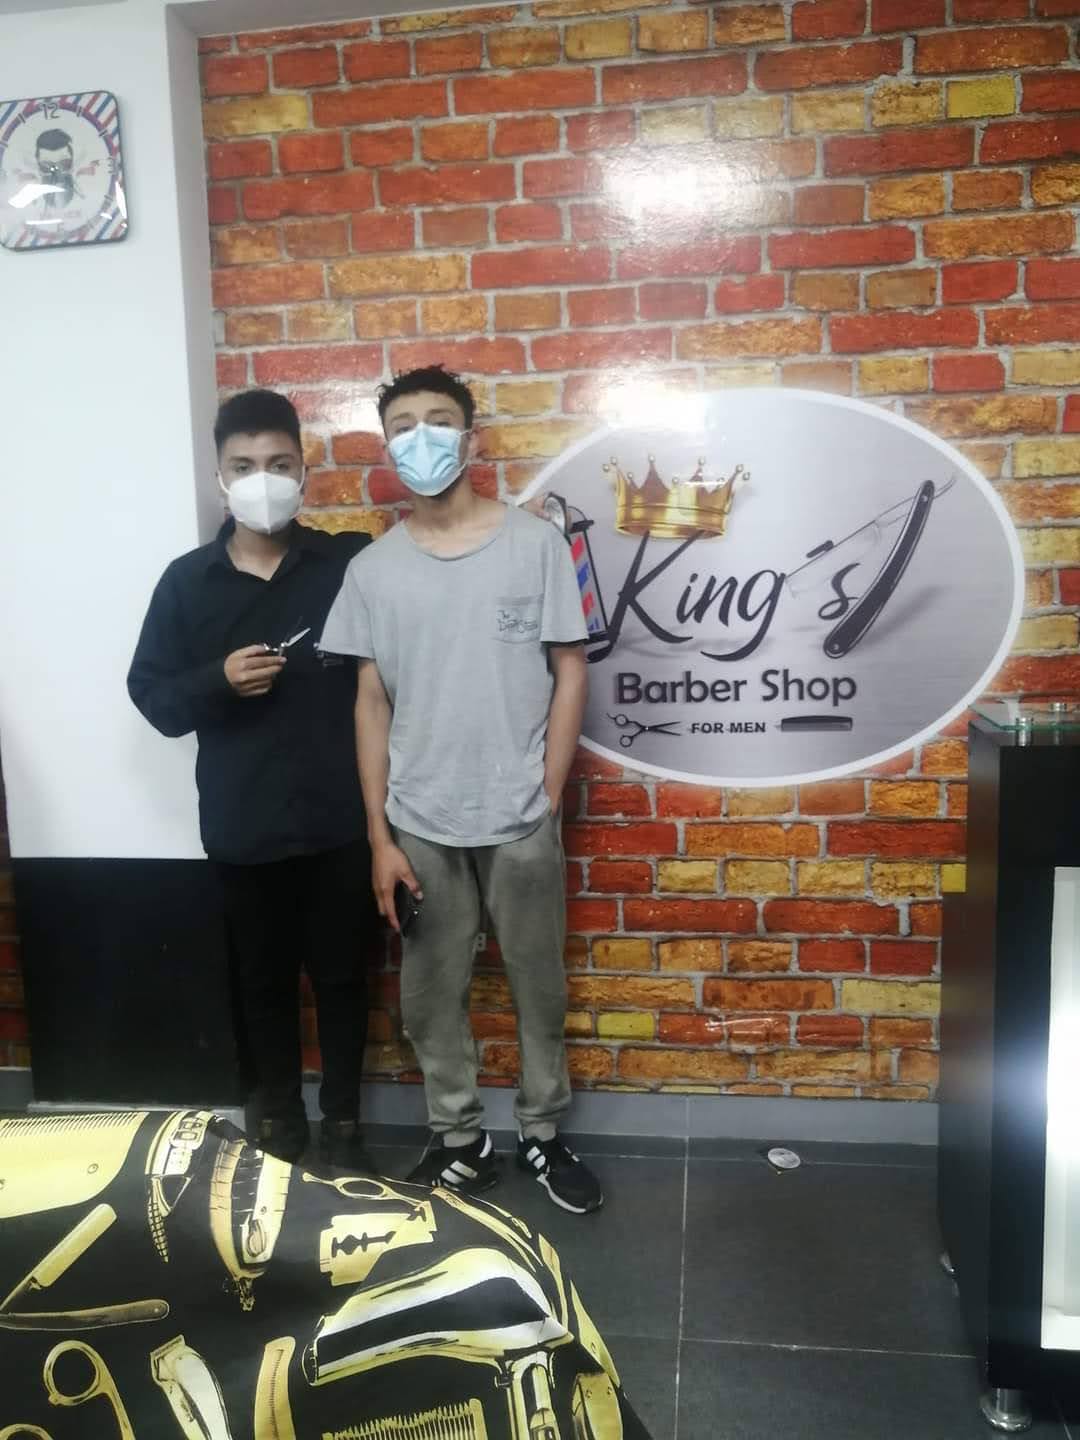 Kings Barber Shop - For Men